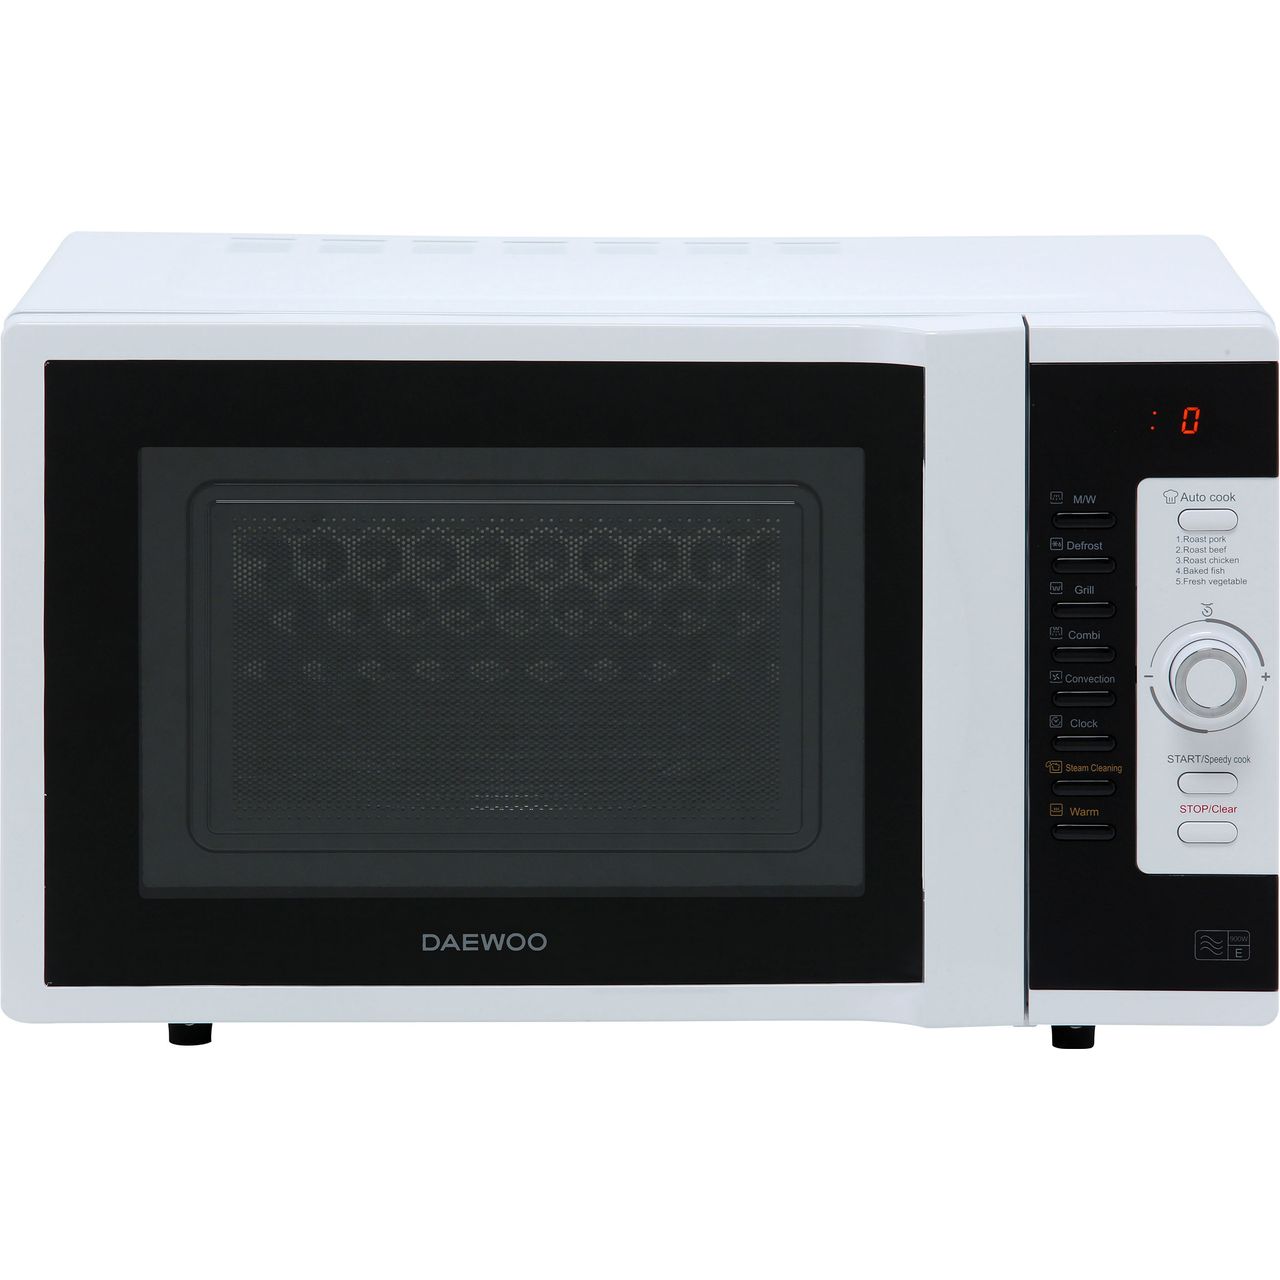 Daewoo KOC9C0TR 28 Litre Combination Microwave Oven Review